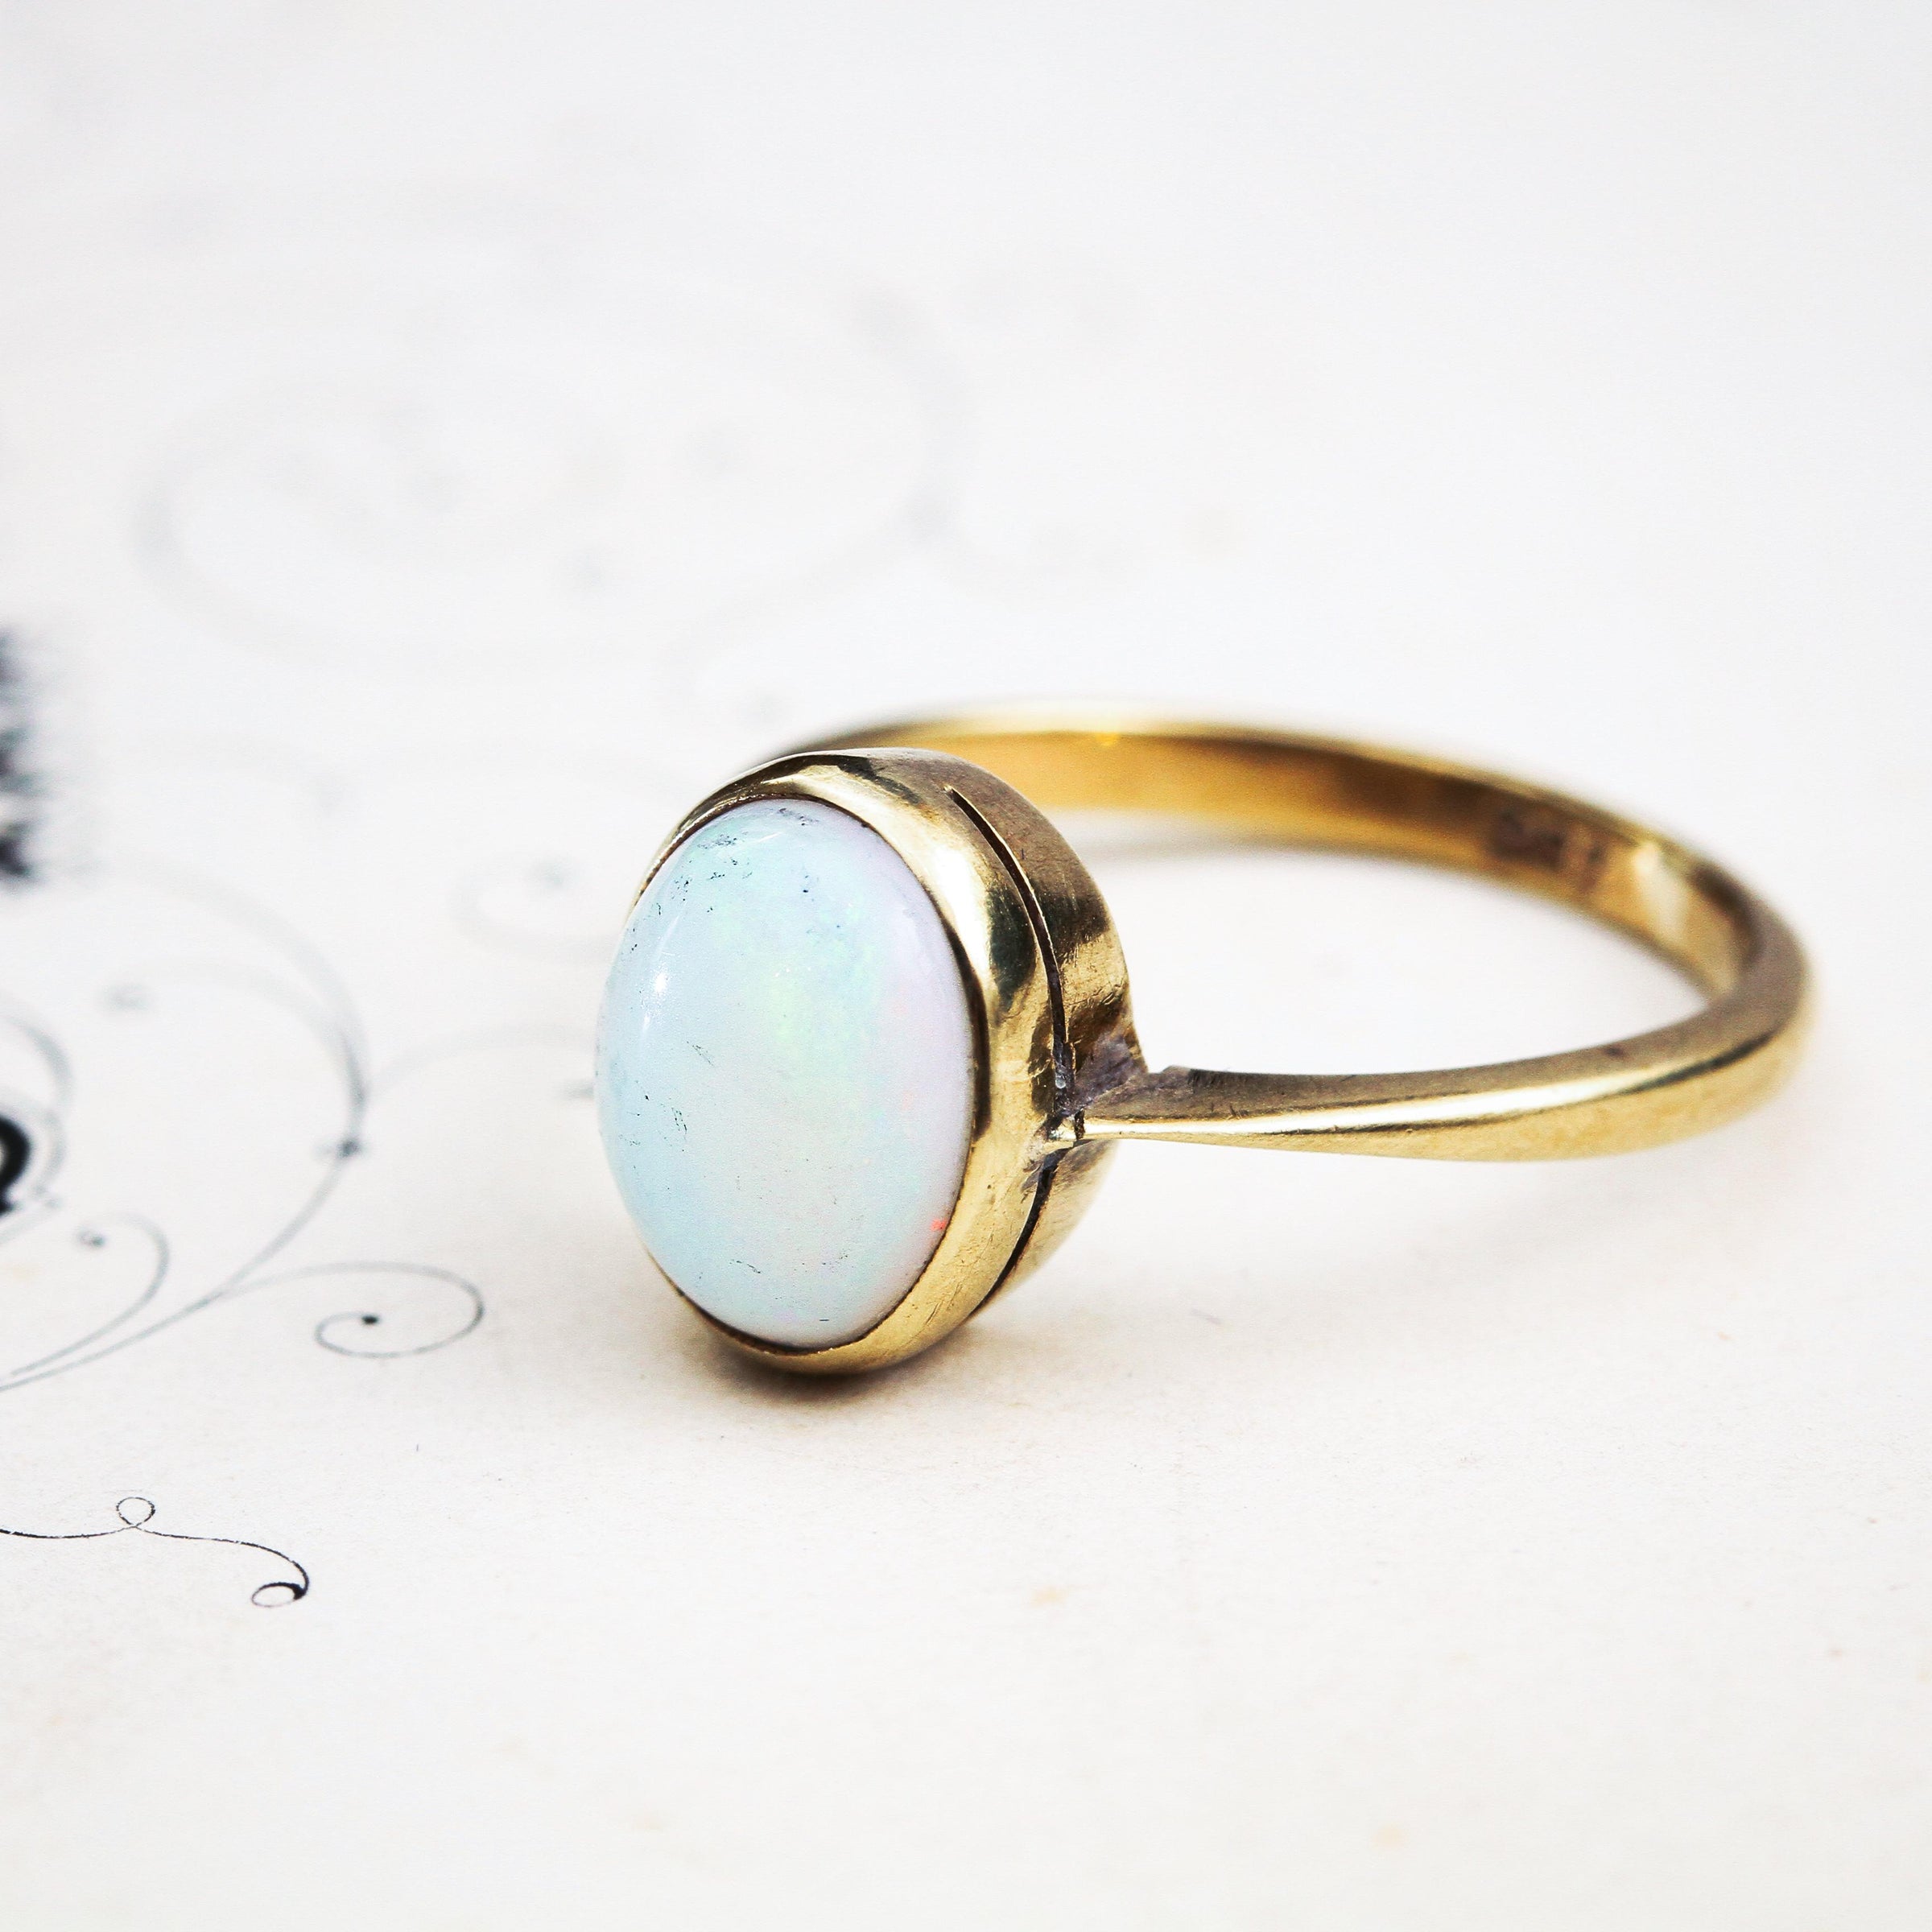 Buy Australian Crystal Opal Ring in 925 Silver, Size 52 FR, 6 US,  Minimalist Style Online in India - Etsy